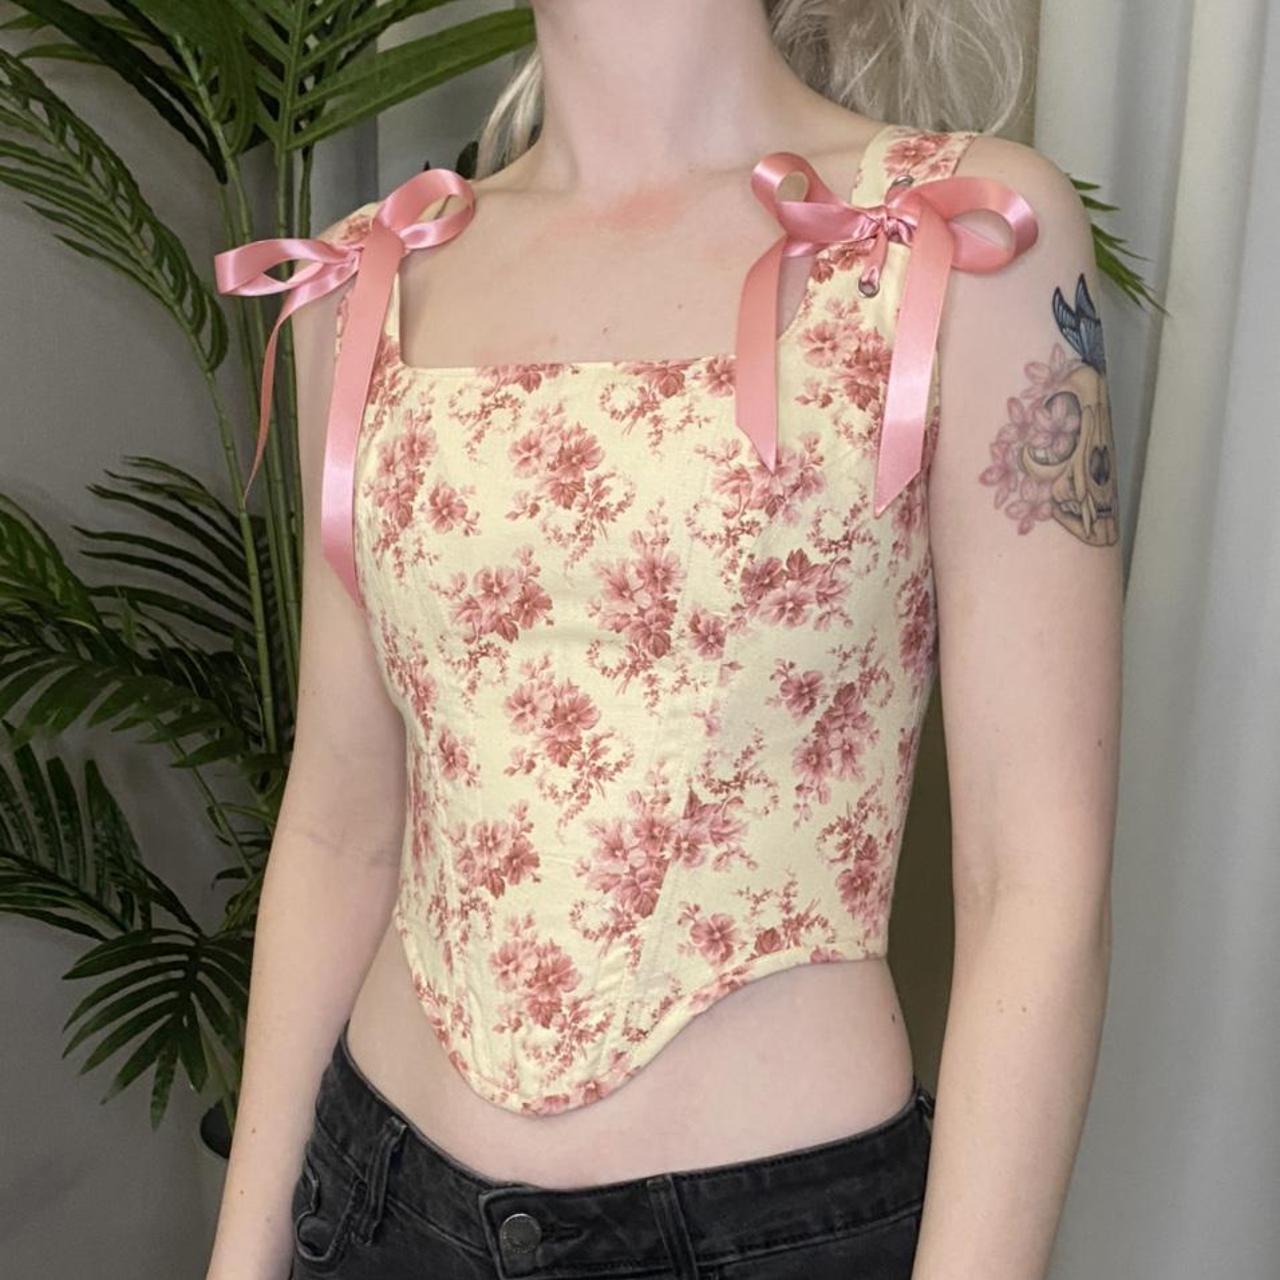 Hot Pink Bandage PLT corset Size 12 Worn once On - Depop